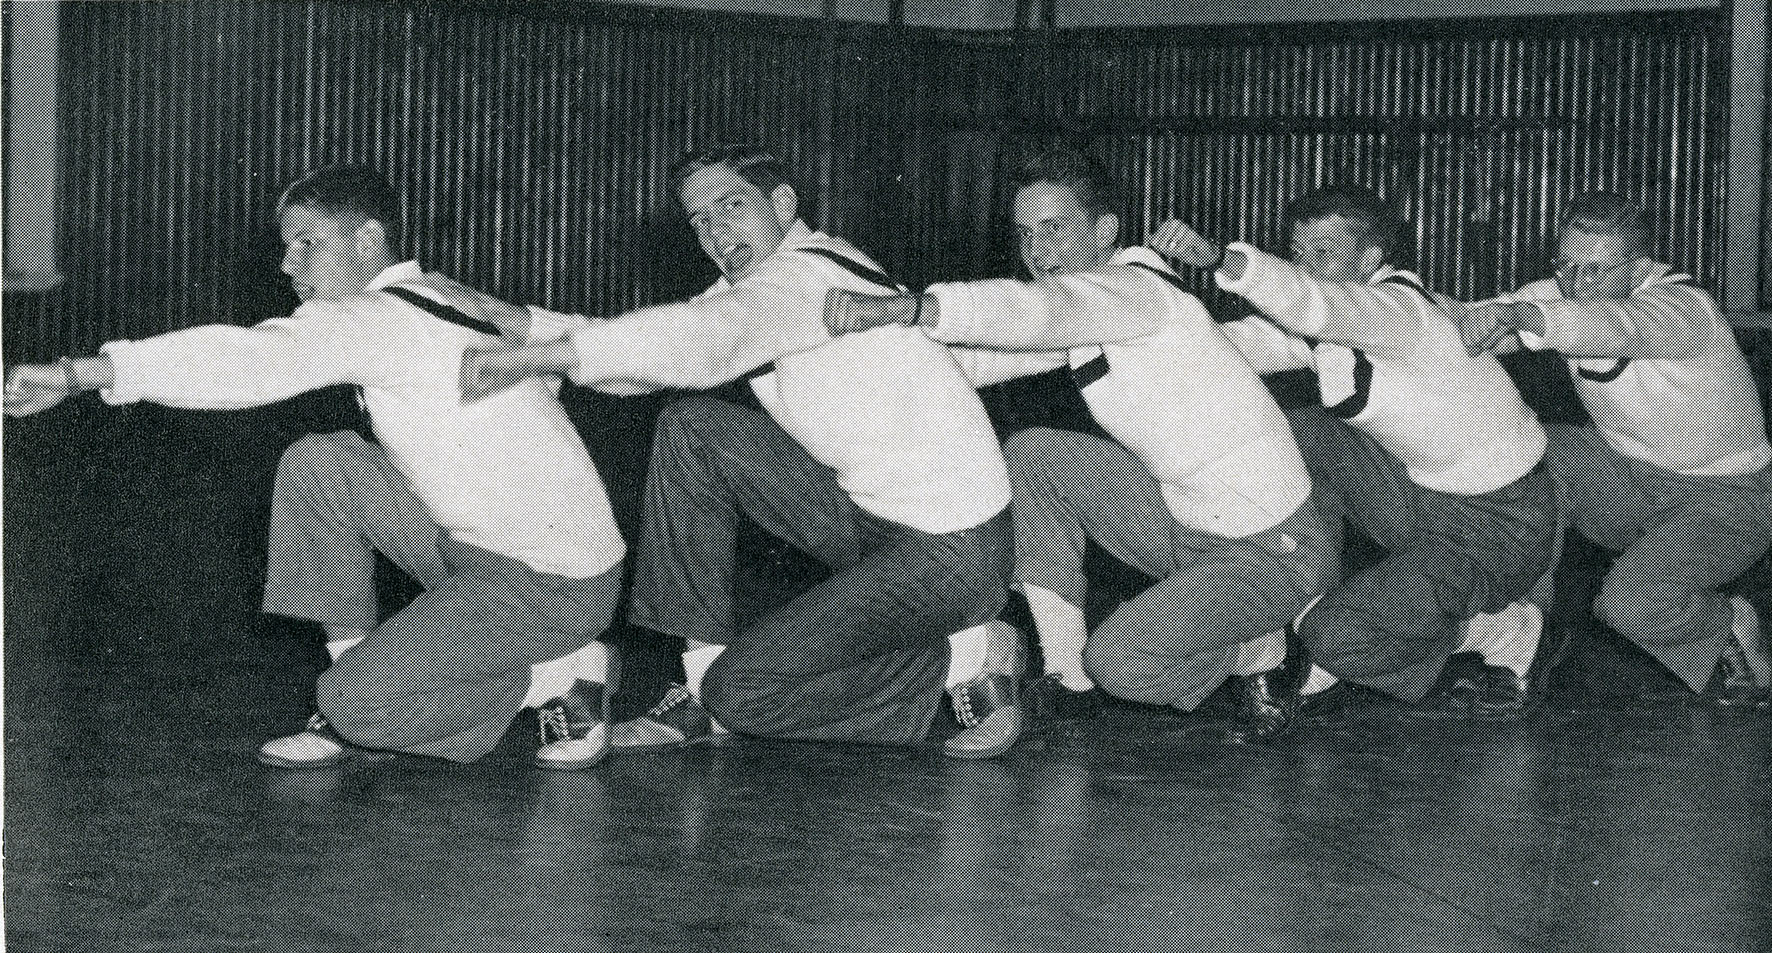 Haverford Cheerleaders in the 1940's